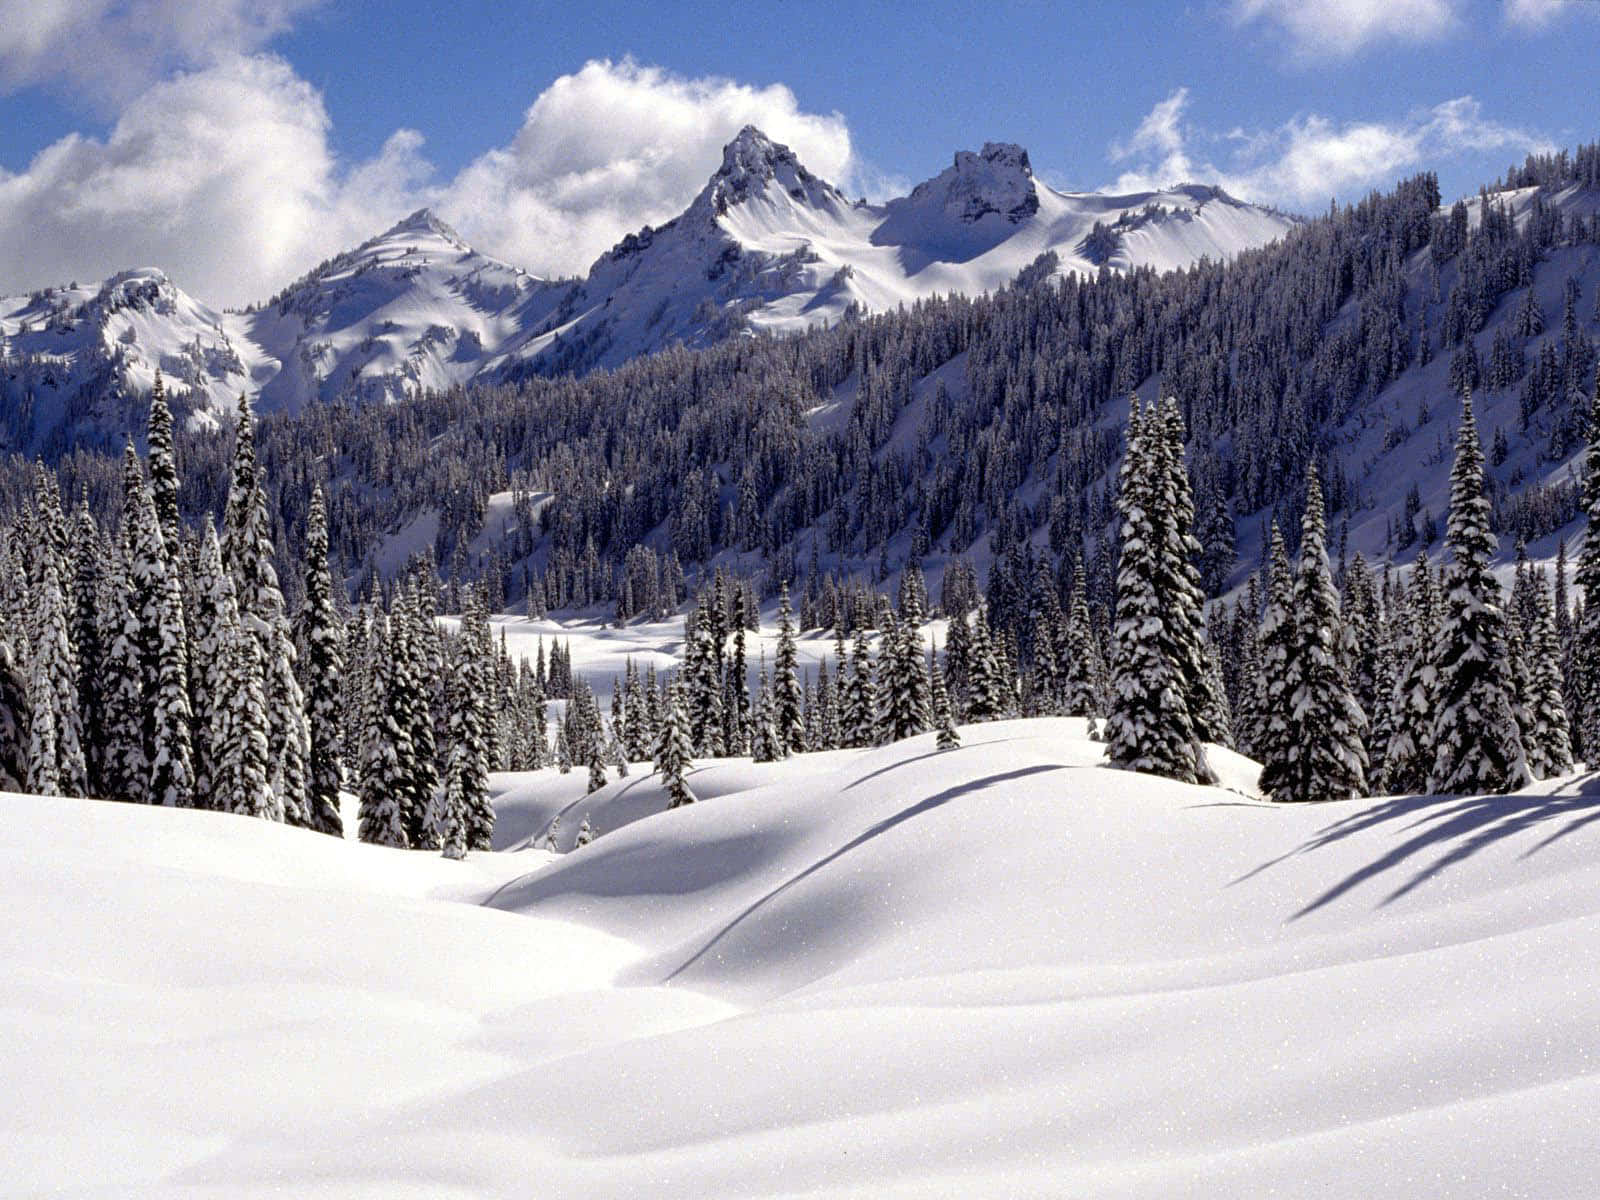 Enjoy the beauty of a winter wonderland